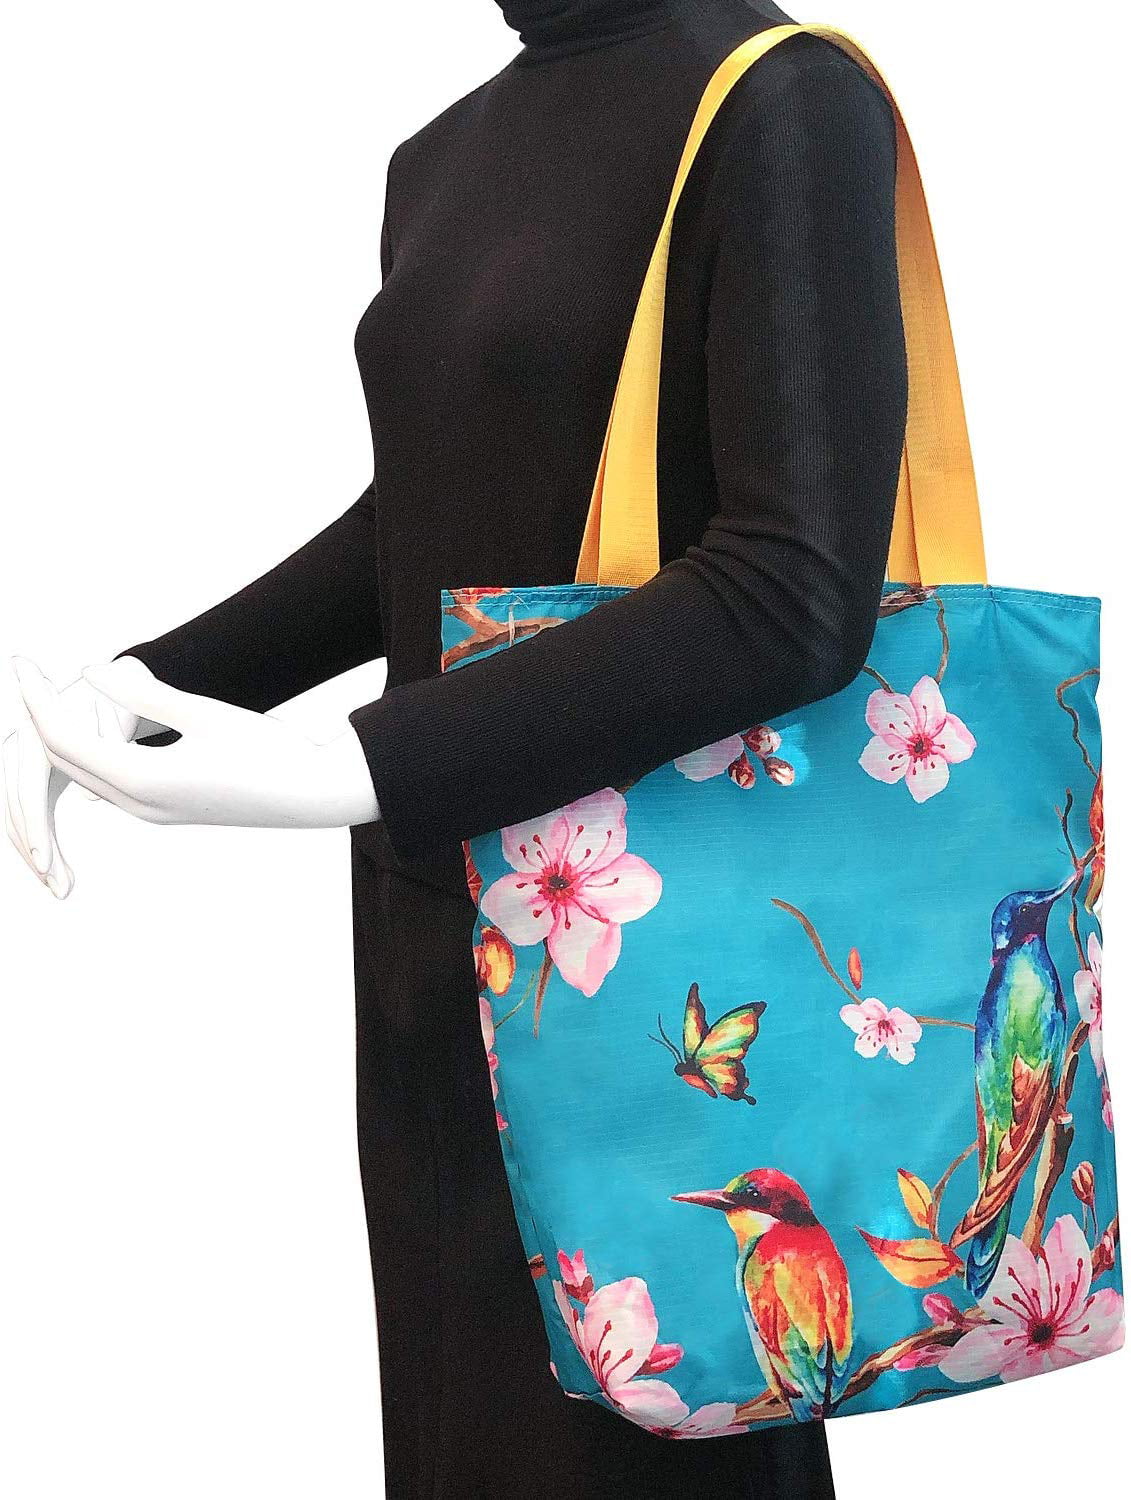 7AM Voyage Capri Tote Bags – Casual Waterproof Tote Bag for Women, Large  Nylon Tote Bags for Traveling, Multifunctional Bags